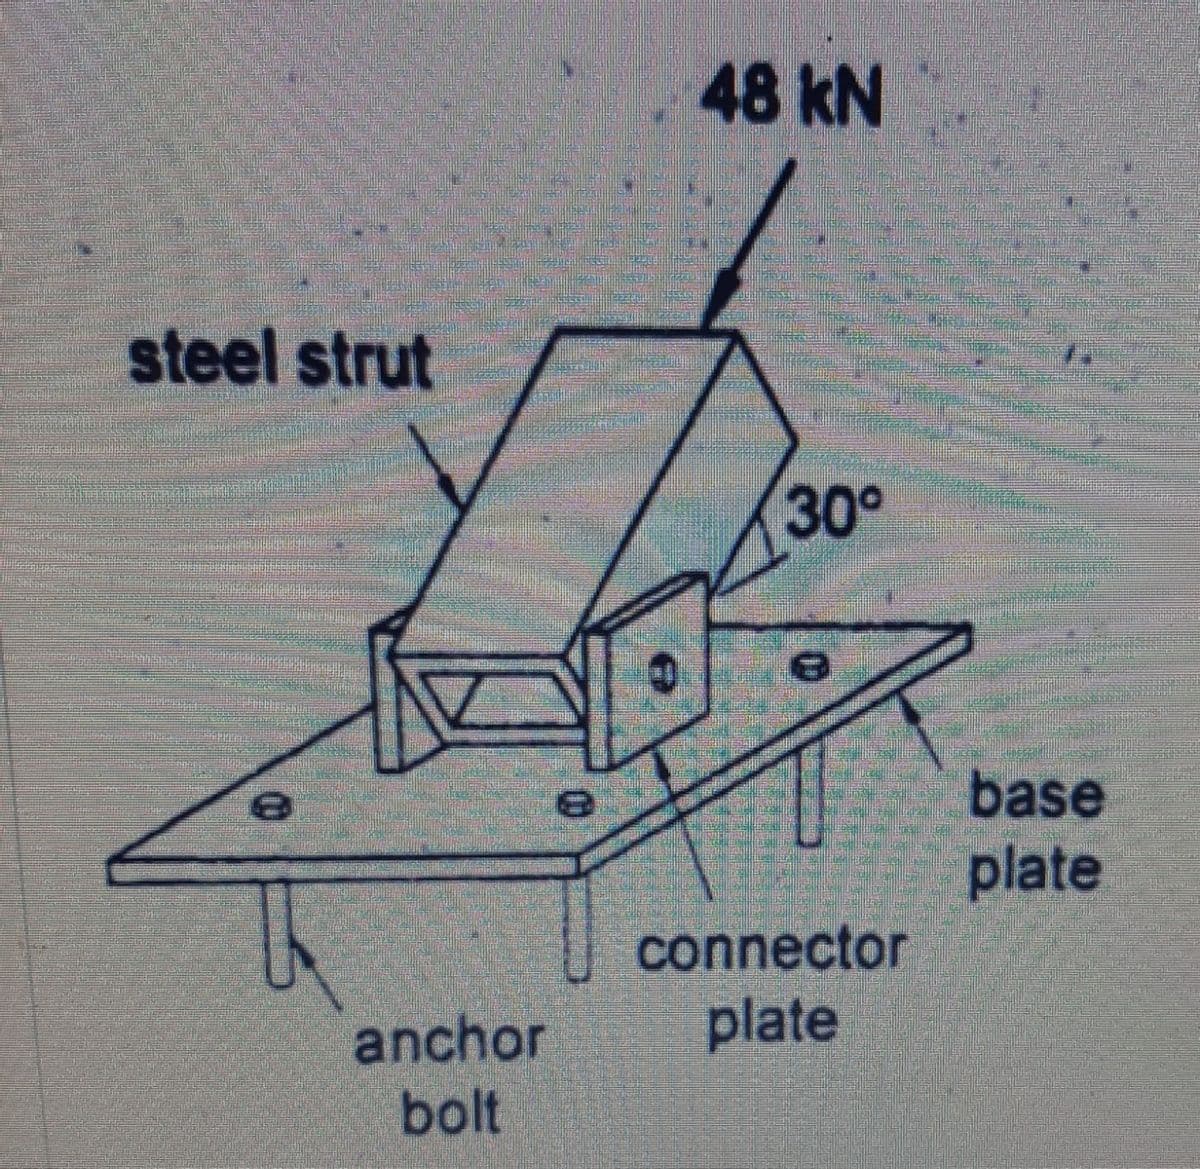 48KN
steel strut
30°
base
plate
connector
plate
anchor
bolt
